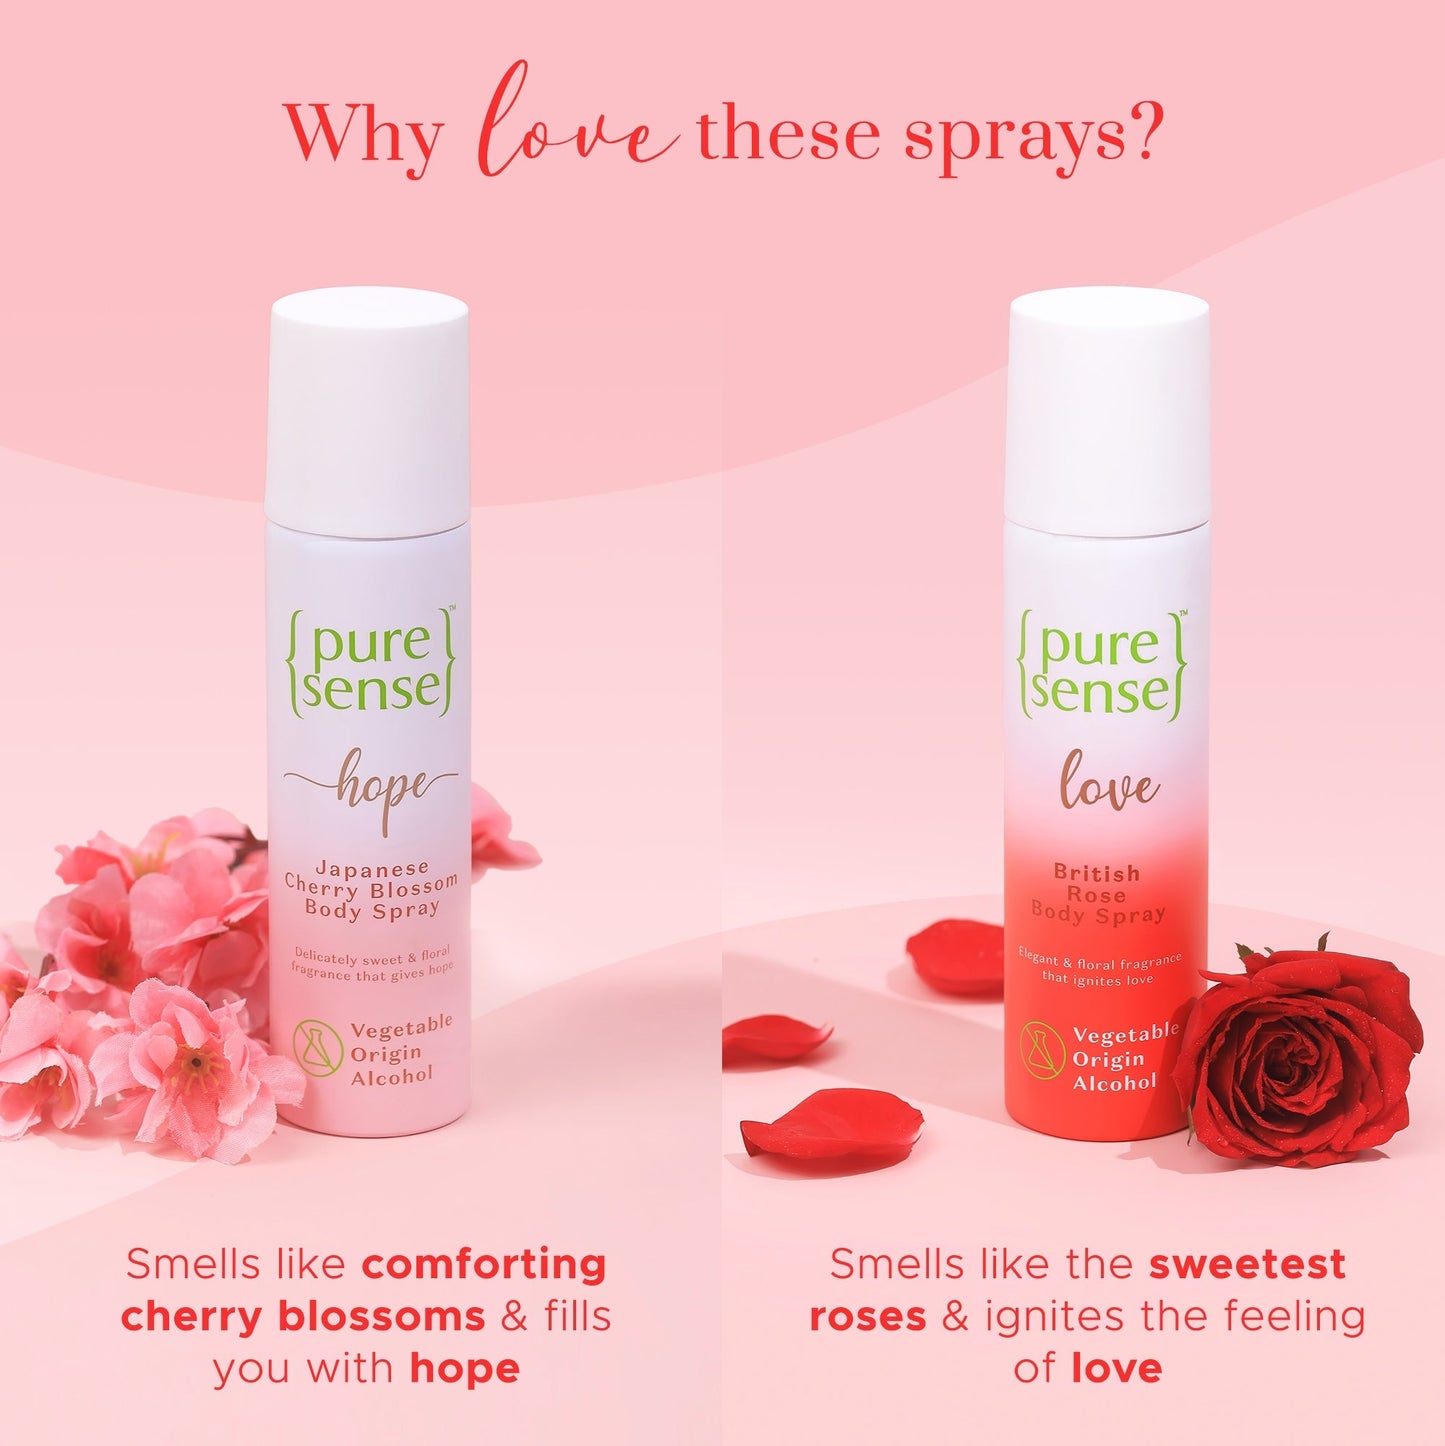 British Rose Body Spray  Japanese Cherry Blossom Body Spray   From the makers of Parachute Advansed  300ml